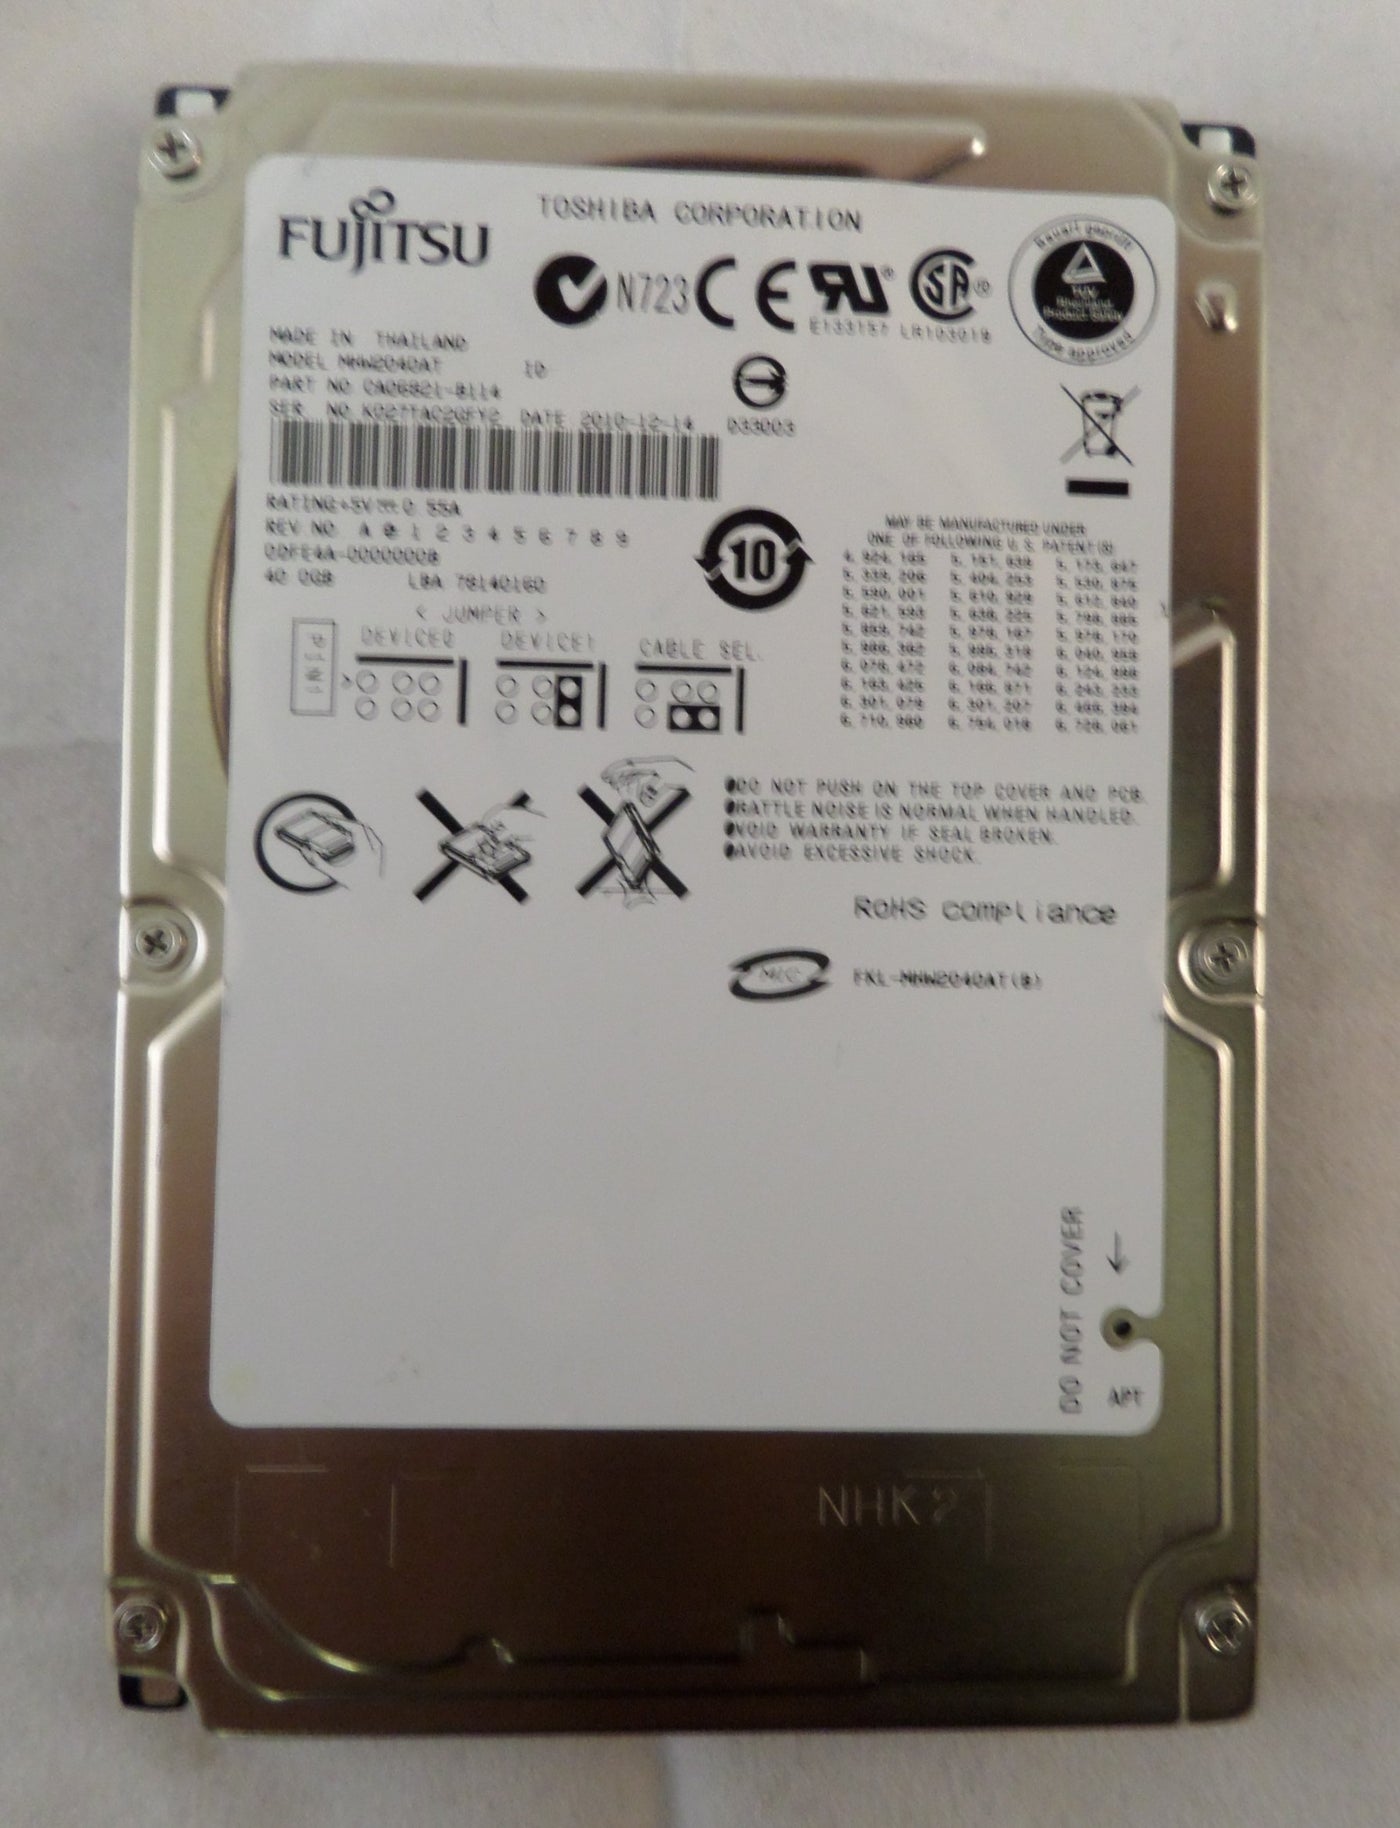 CA06821-B114 - Fujitsu 40GB IDE 4200rpm 2.5in HDD - Refurbished